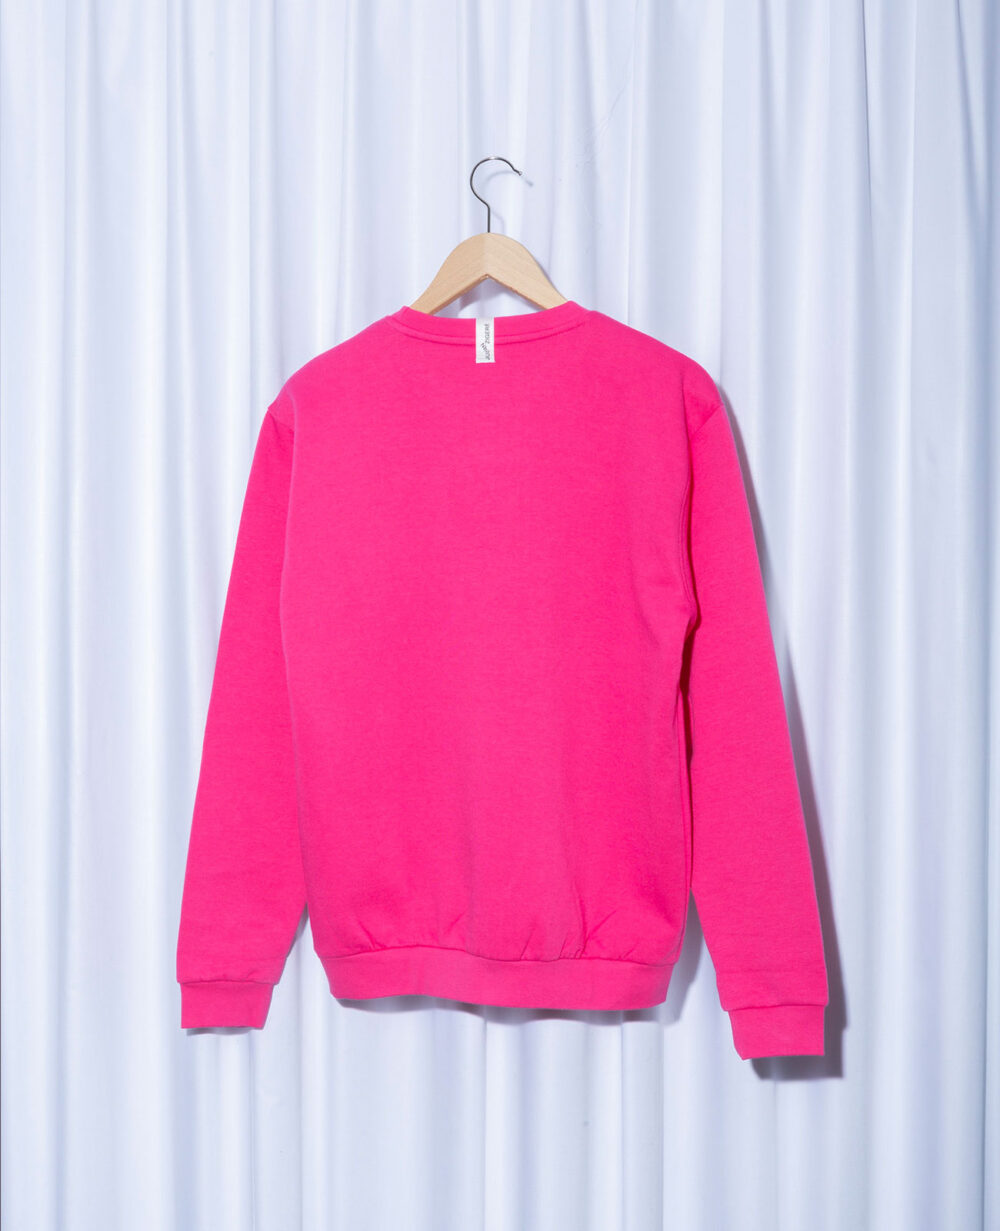 Backside Appenzeller Sweater pink | Collab with Julian Zigerli